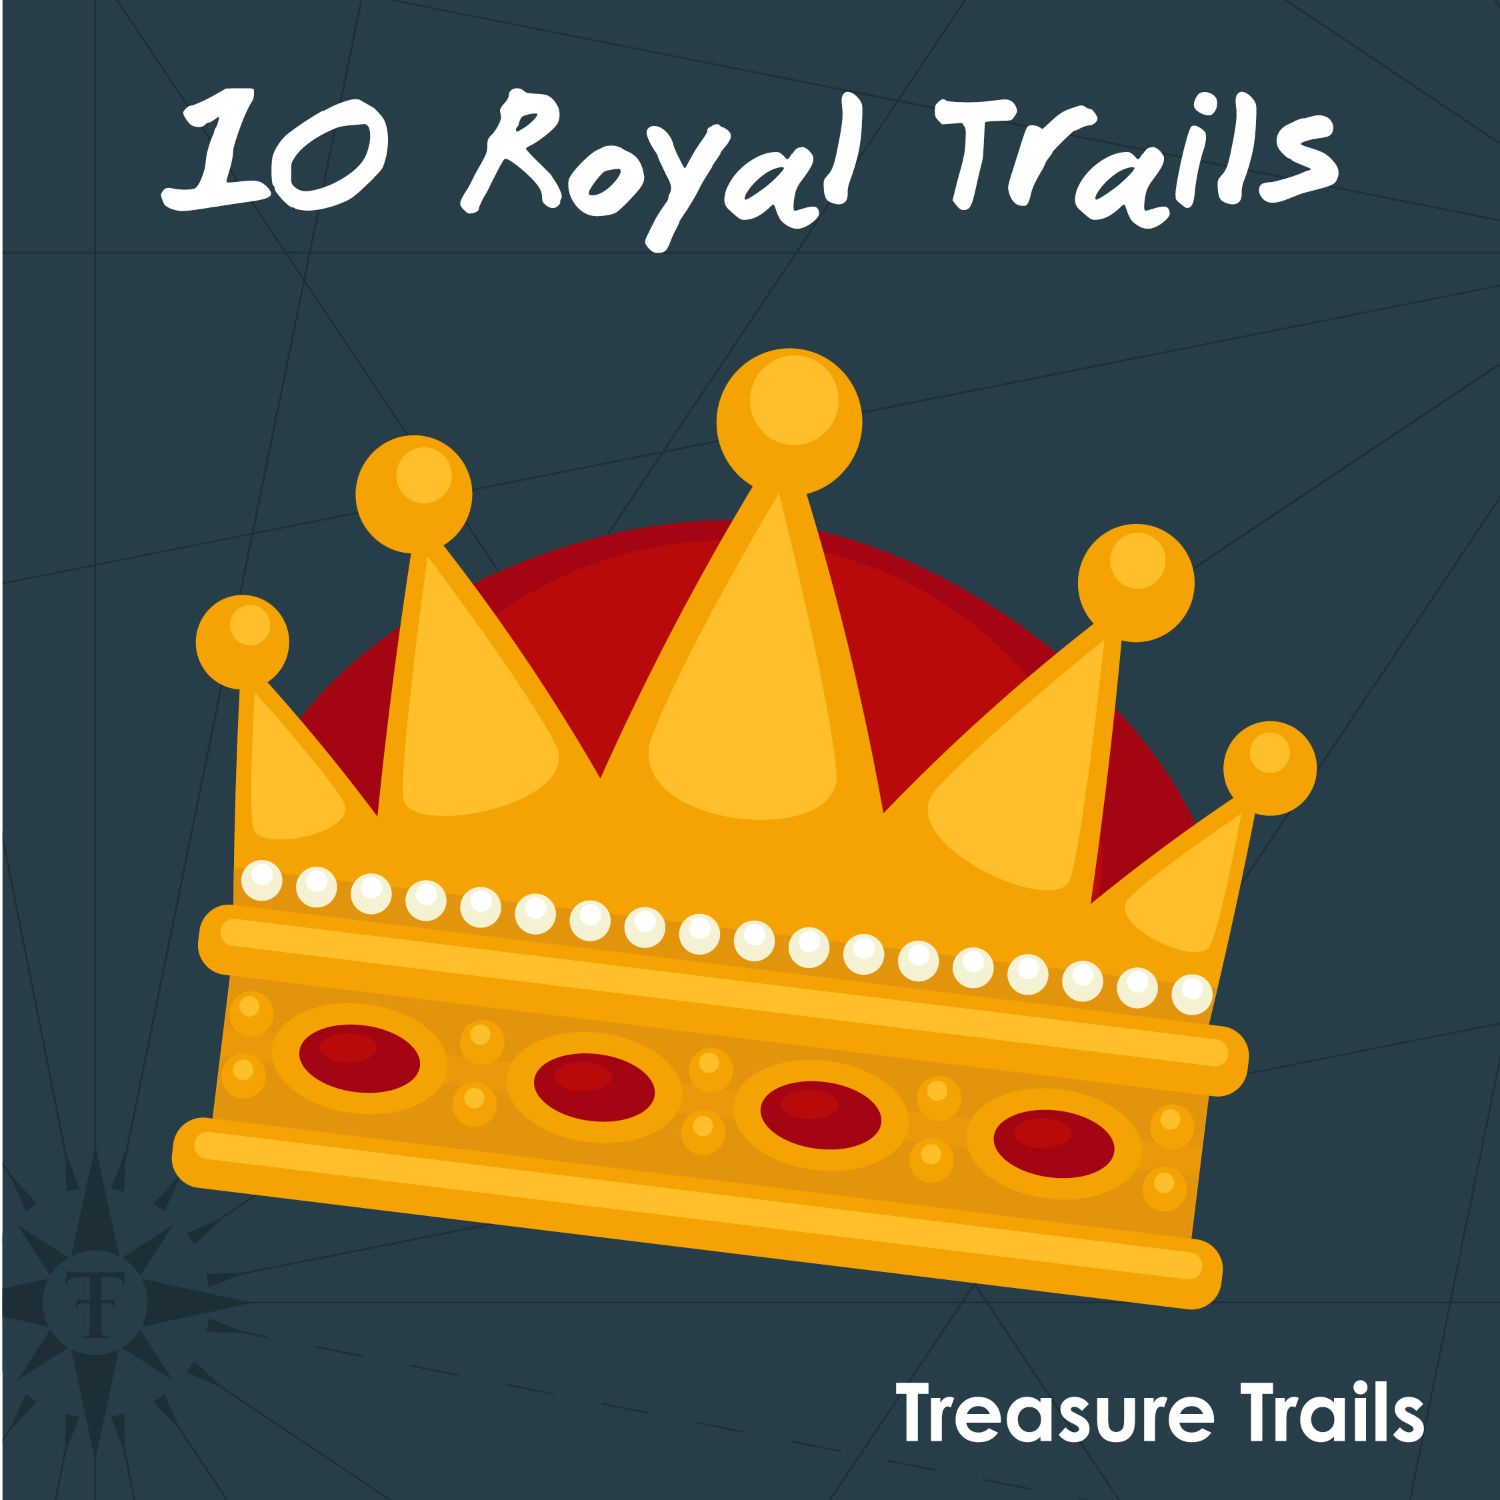 10 Royal Trails